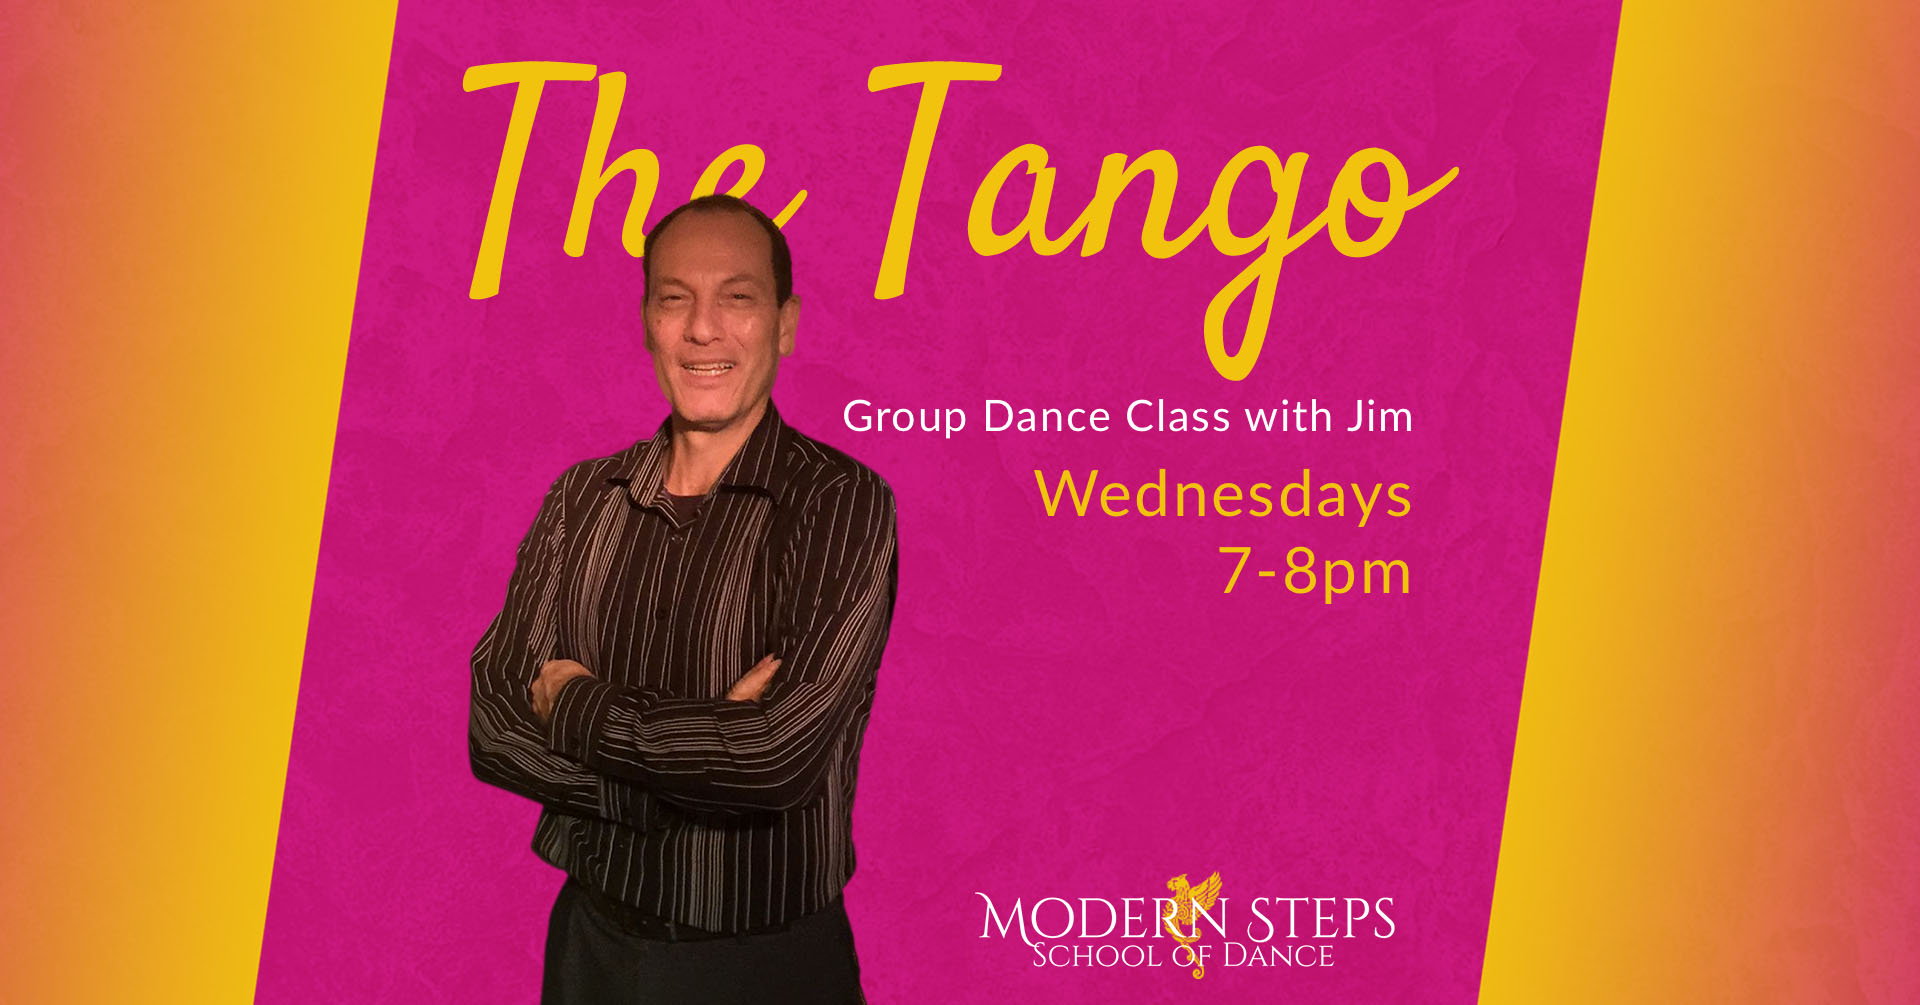 Modern Steps School of Dance Naples Florida The Tango Dance Classes - Group Ballroom Dance Lessons